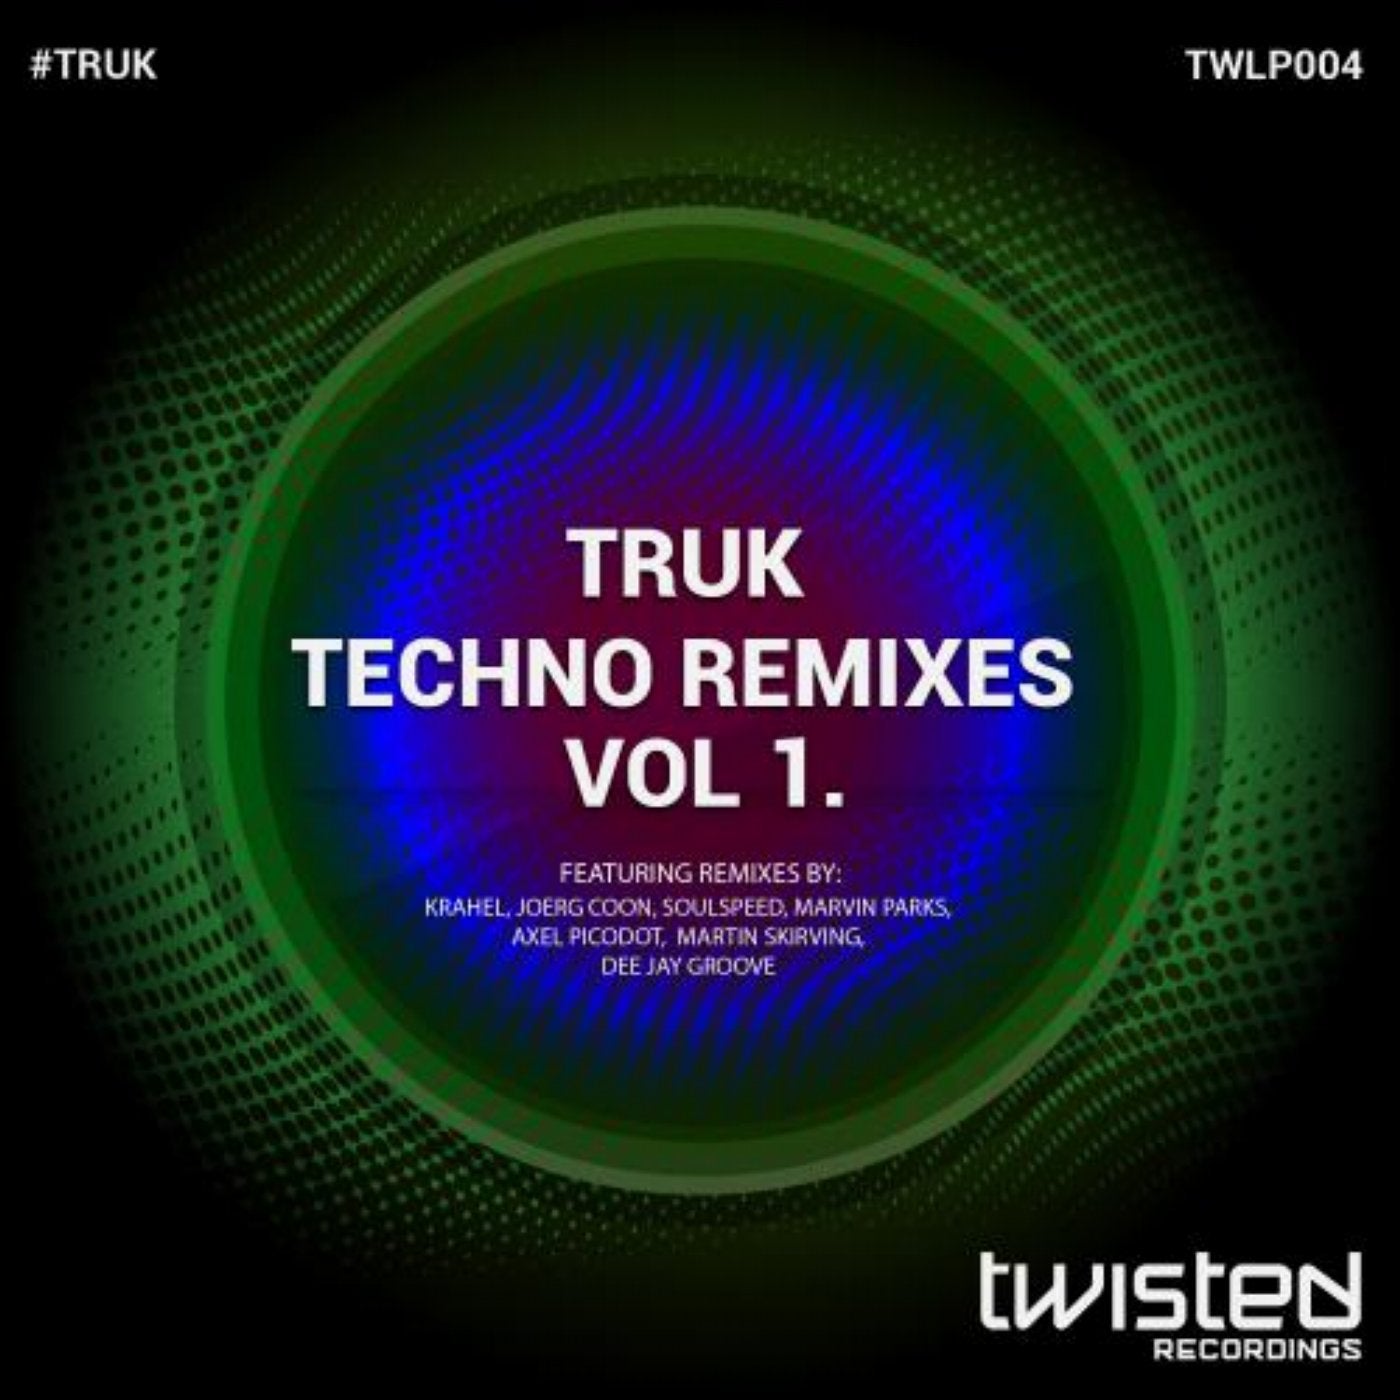 TRUK Techno Remixes, Vol. 1